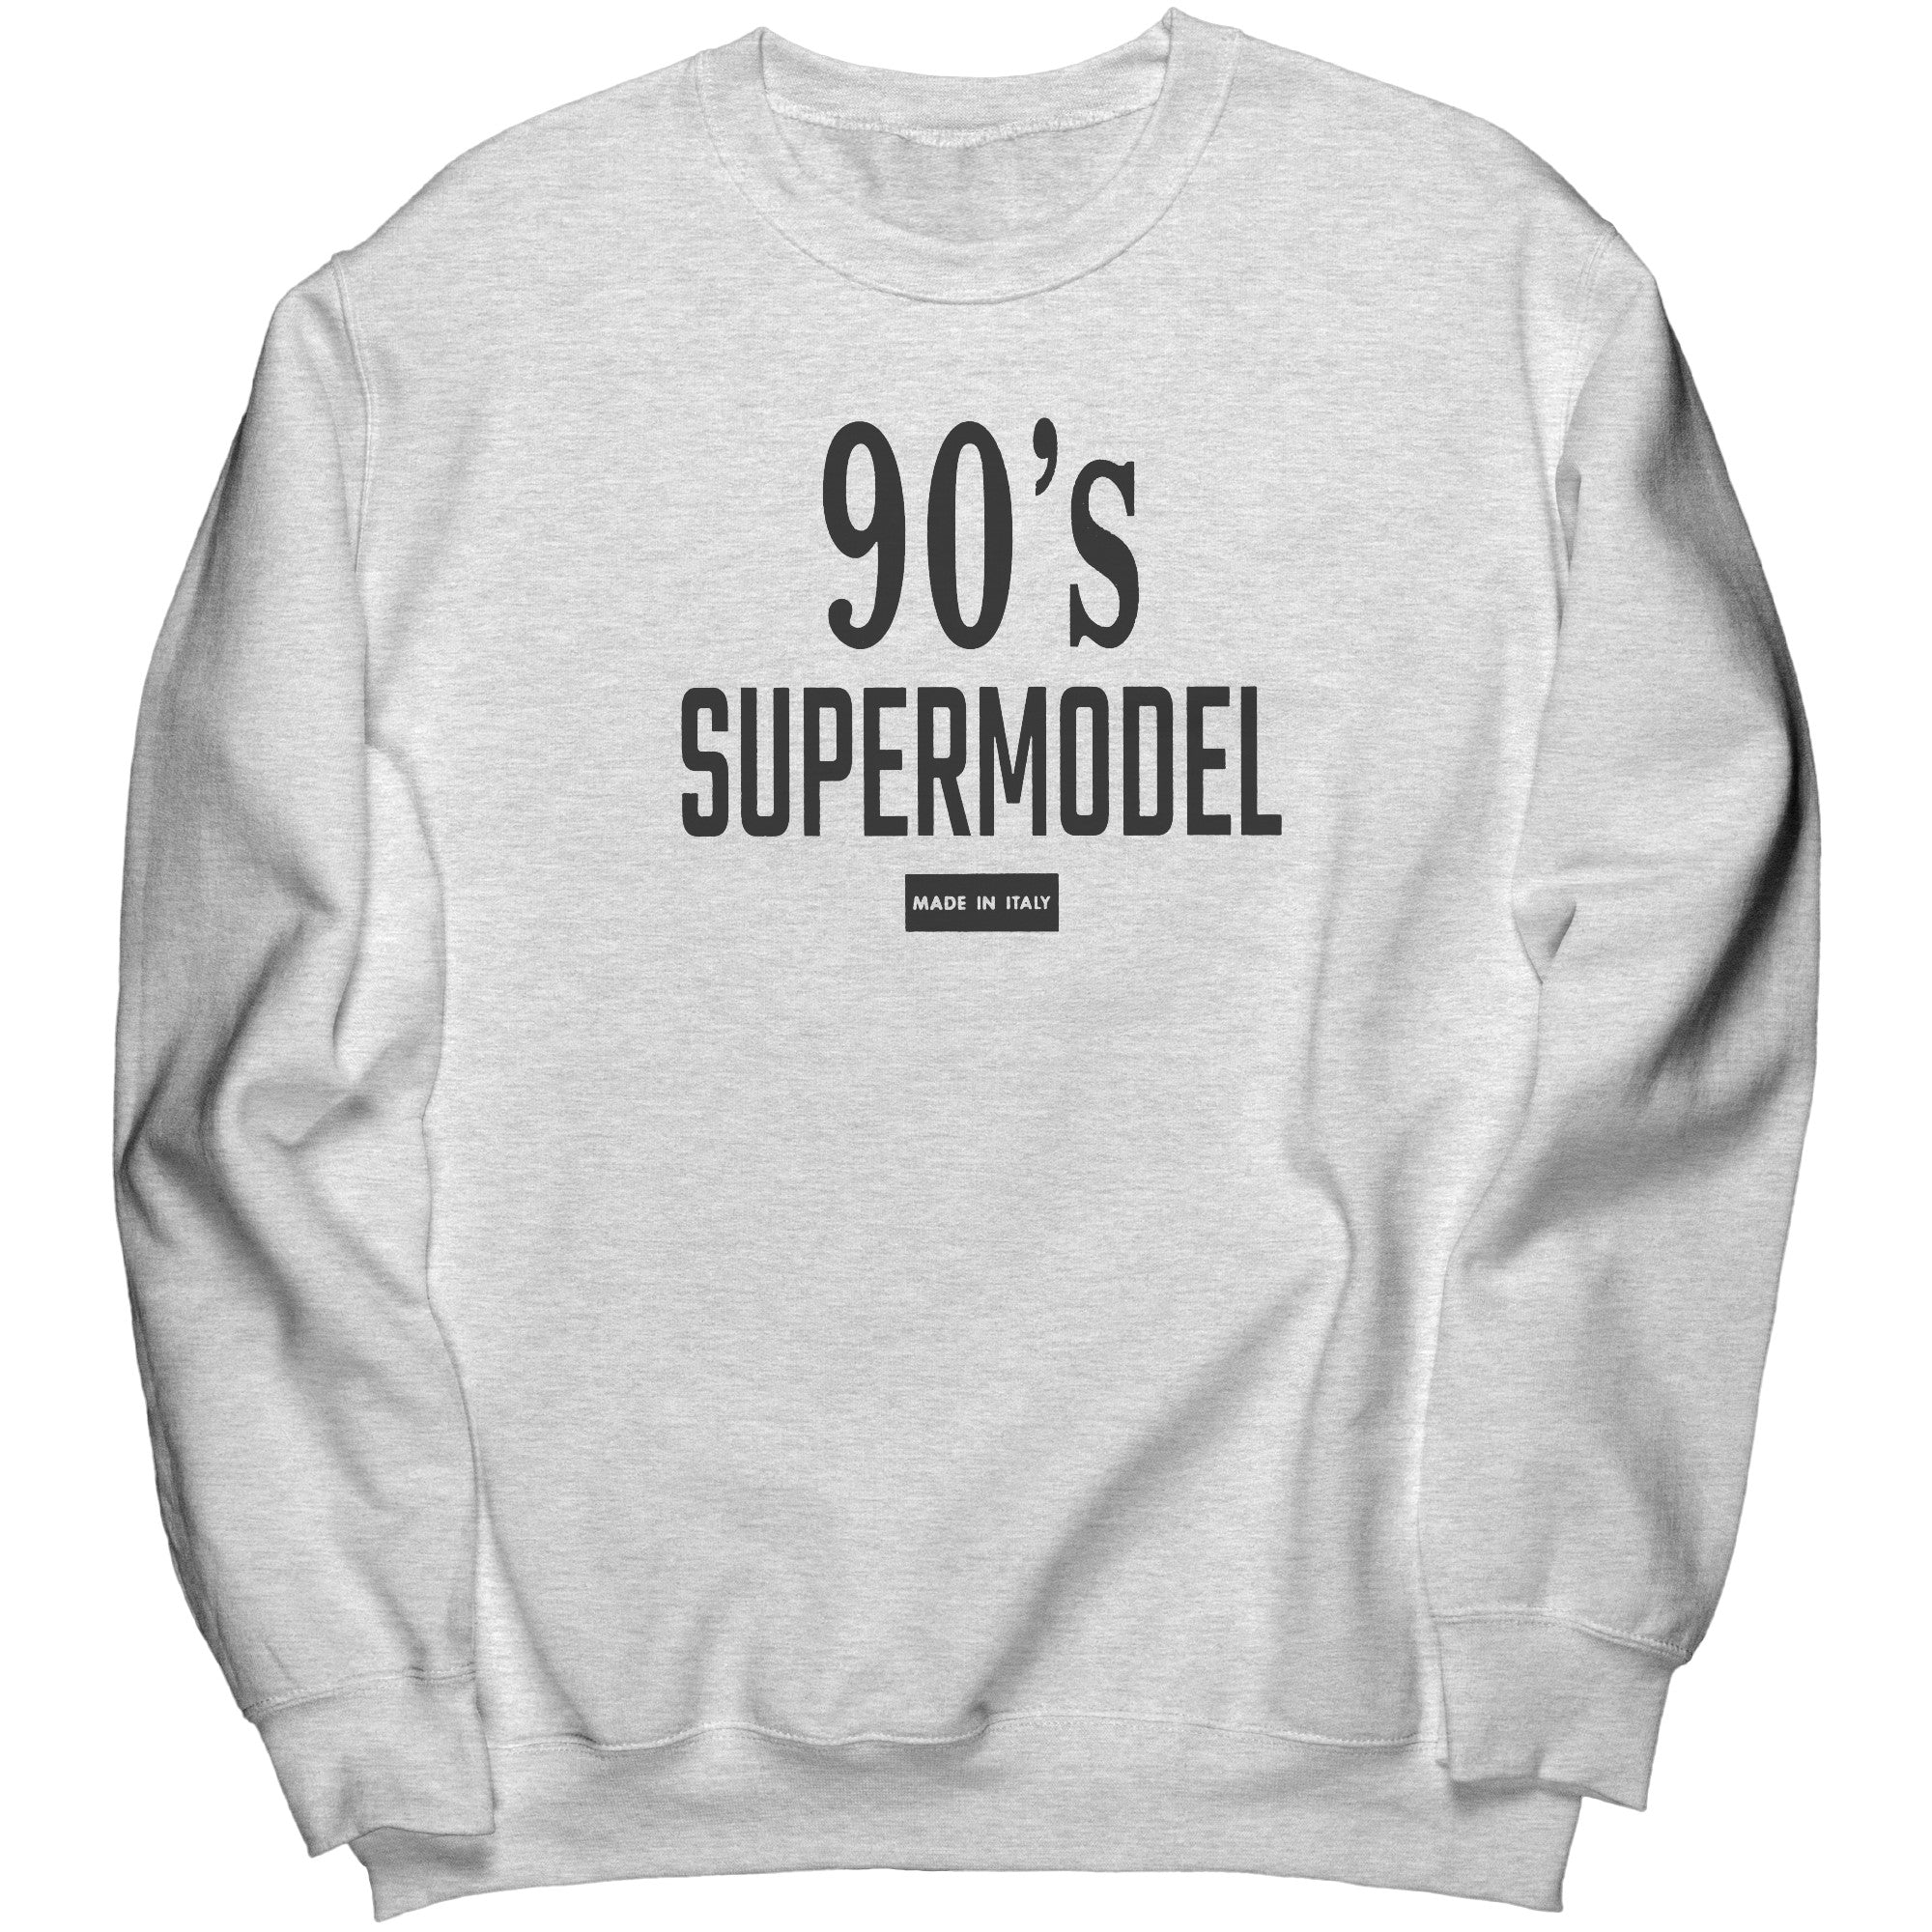 90 Supermodel Sweatshirt